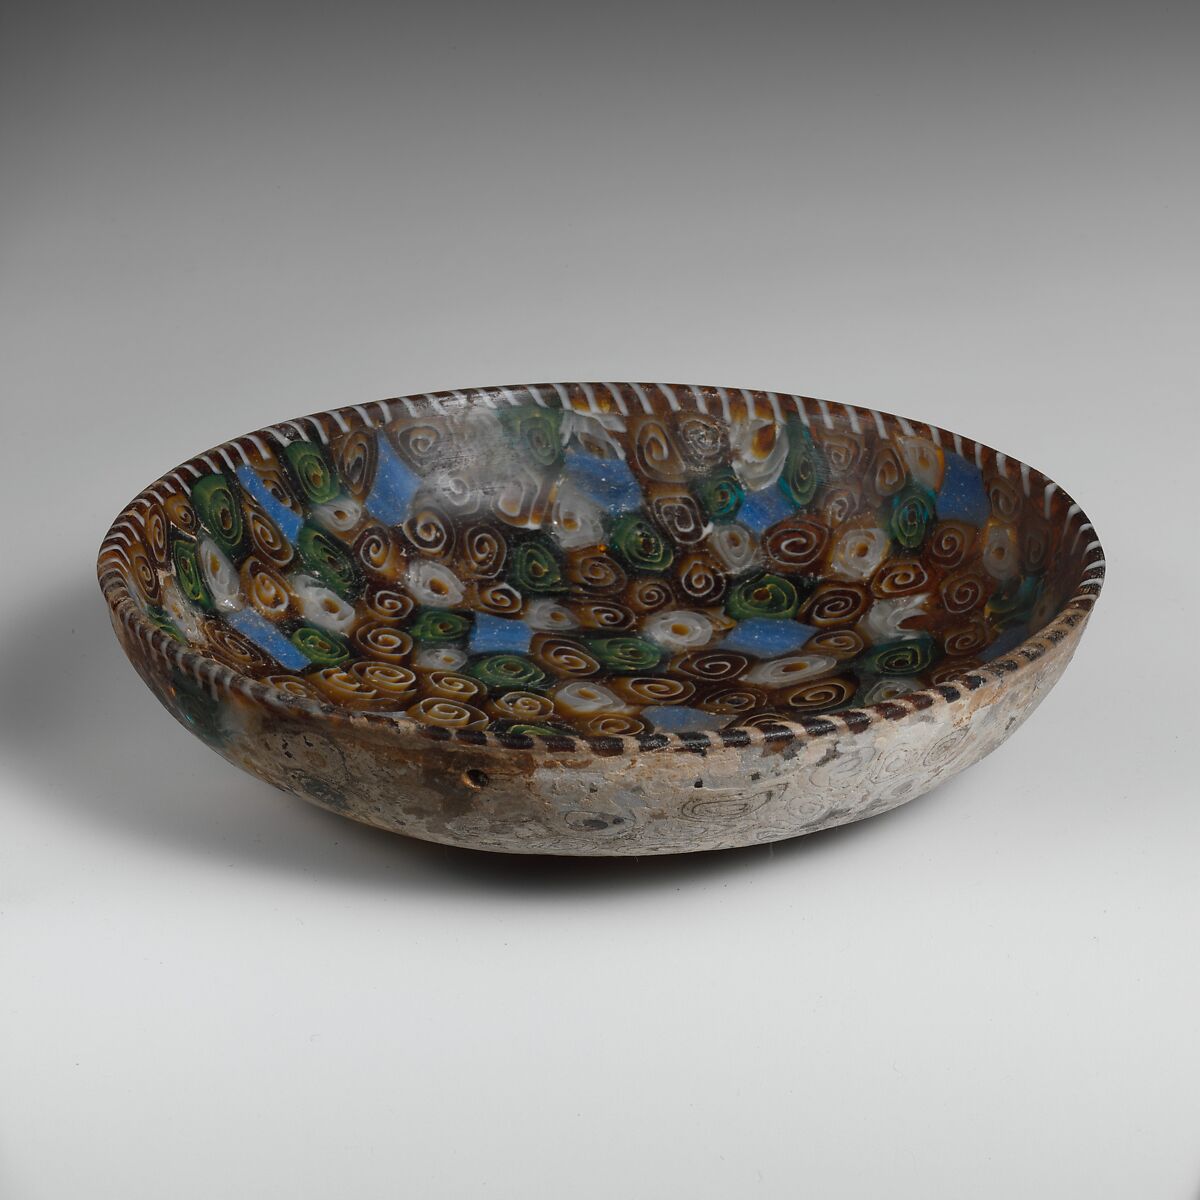 Glass mosaic bowl, Glass, Greek, probably Eastern Mediterranean 